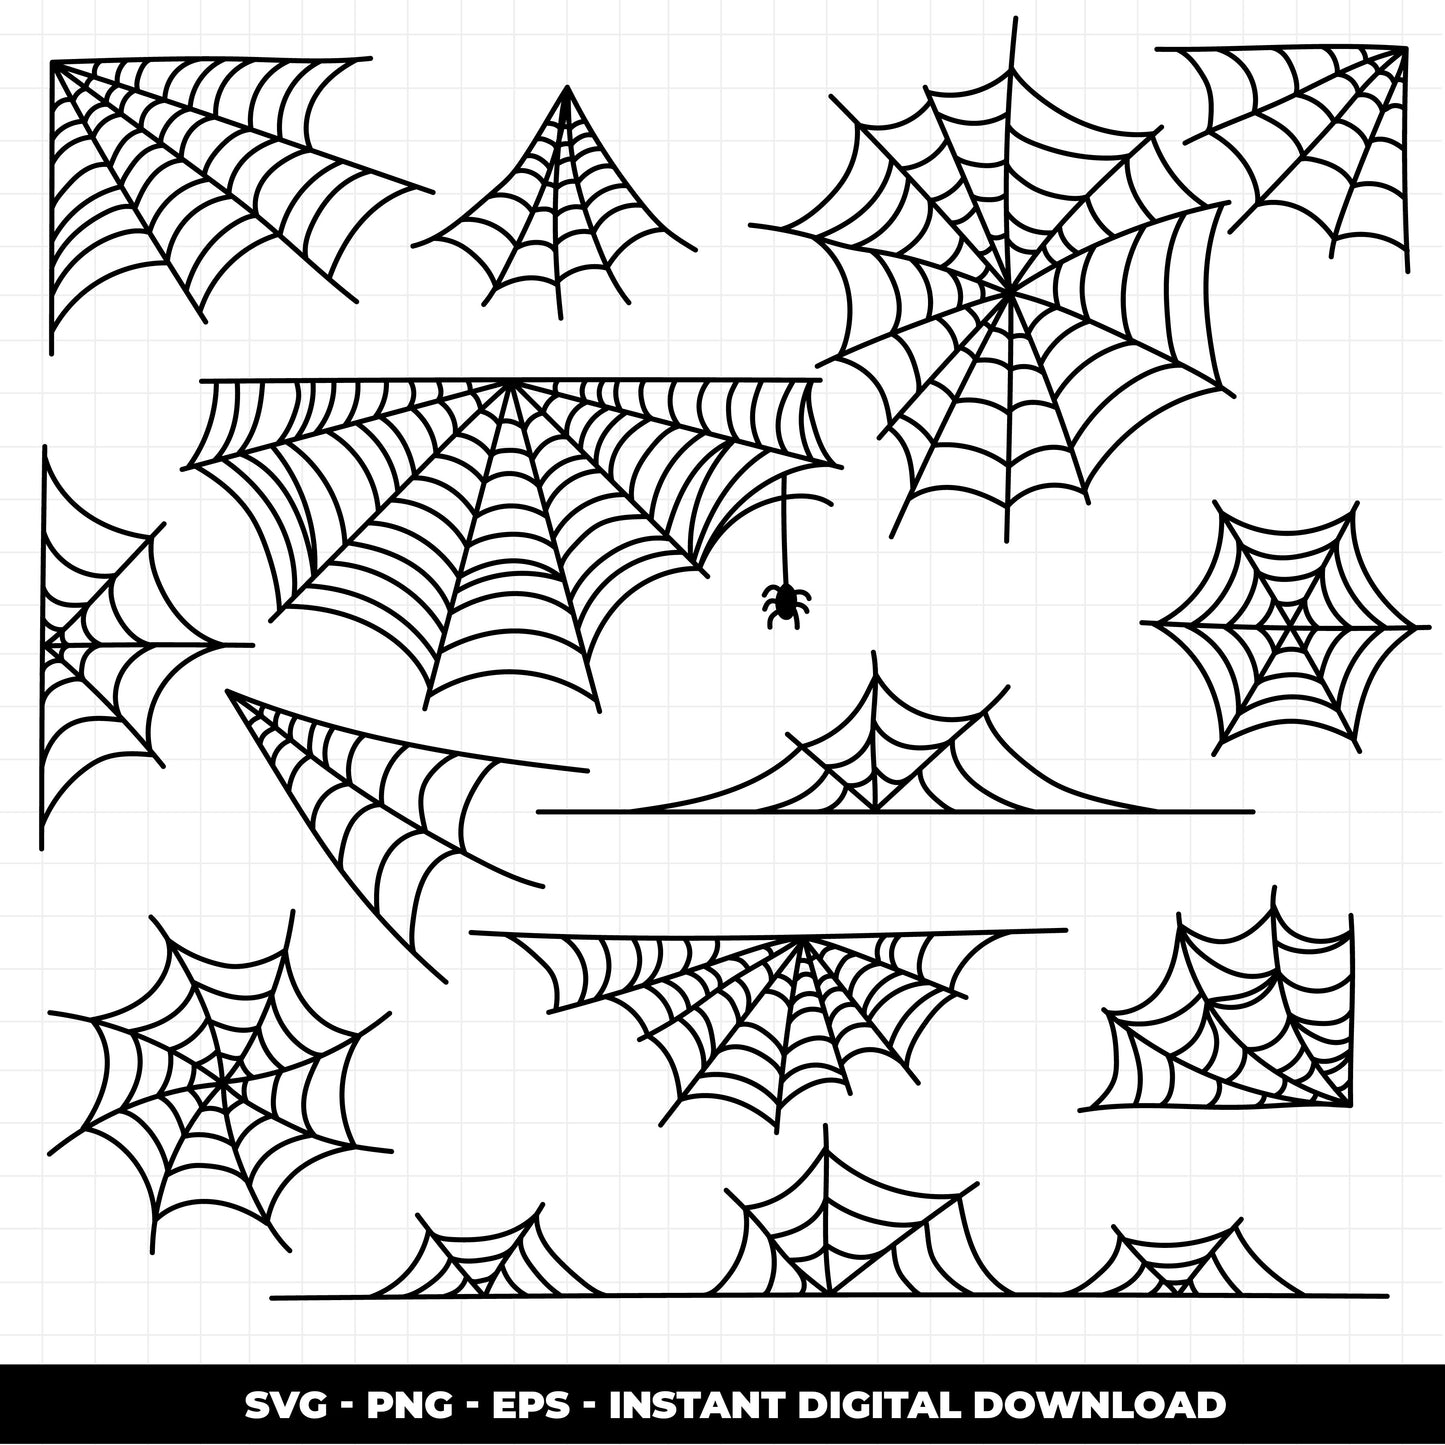 COD1406 - Spider Web clip art, Halloween clipart, spider Clipart, halloween Clipart,Spider Web SVG, HALLOWENN SVG